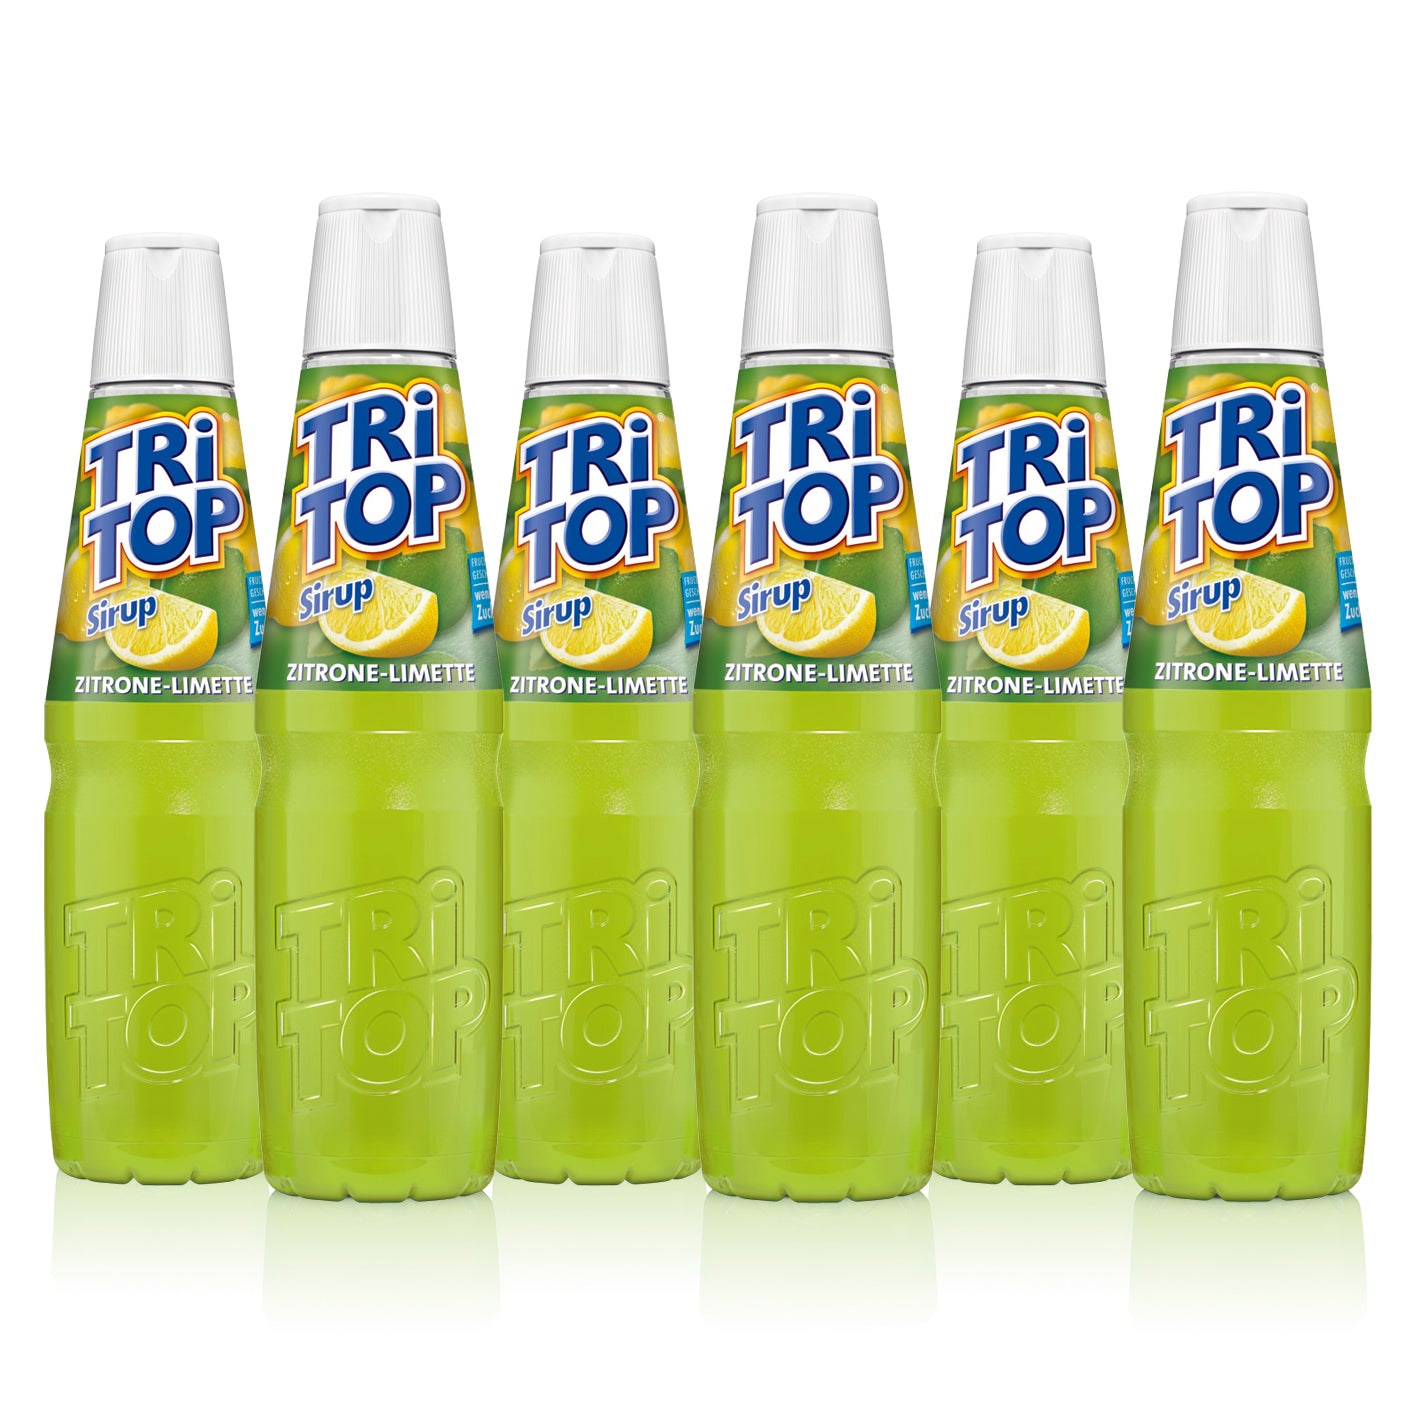 TRi TOP Sirup Zitrone-Limette 6er-Set - 6x 600 ml